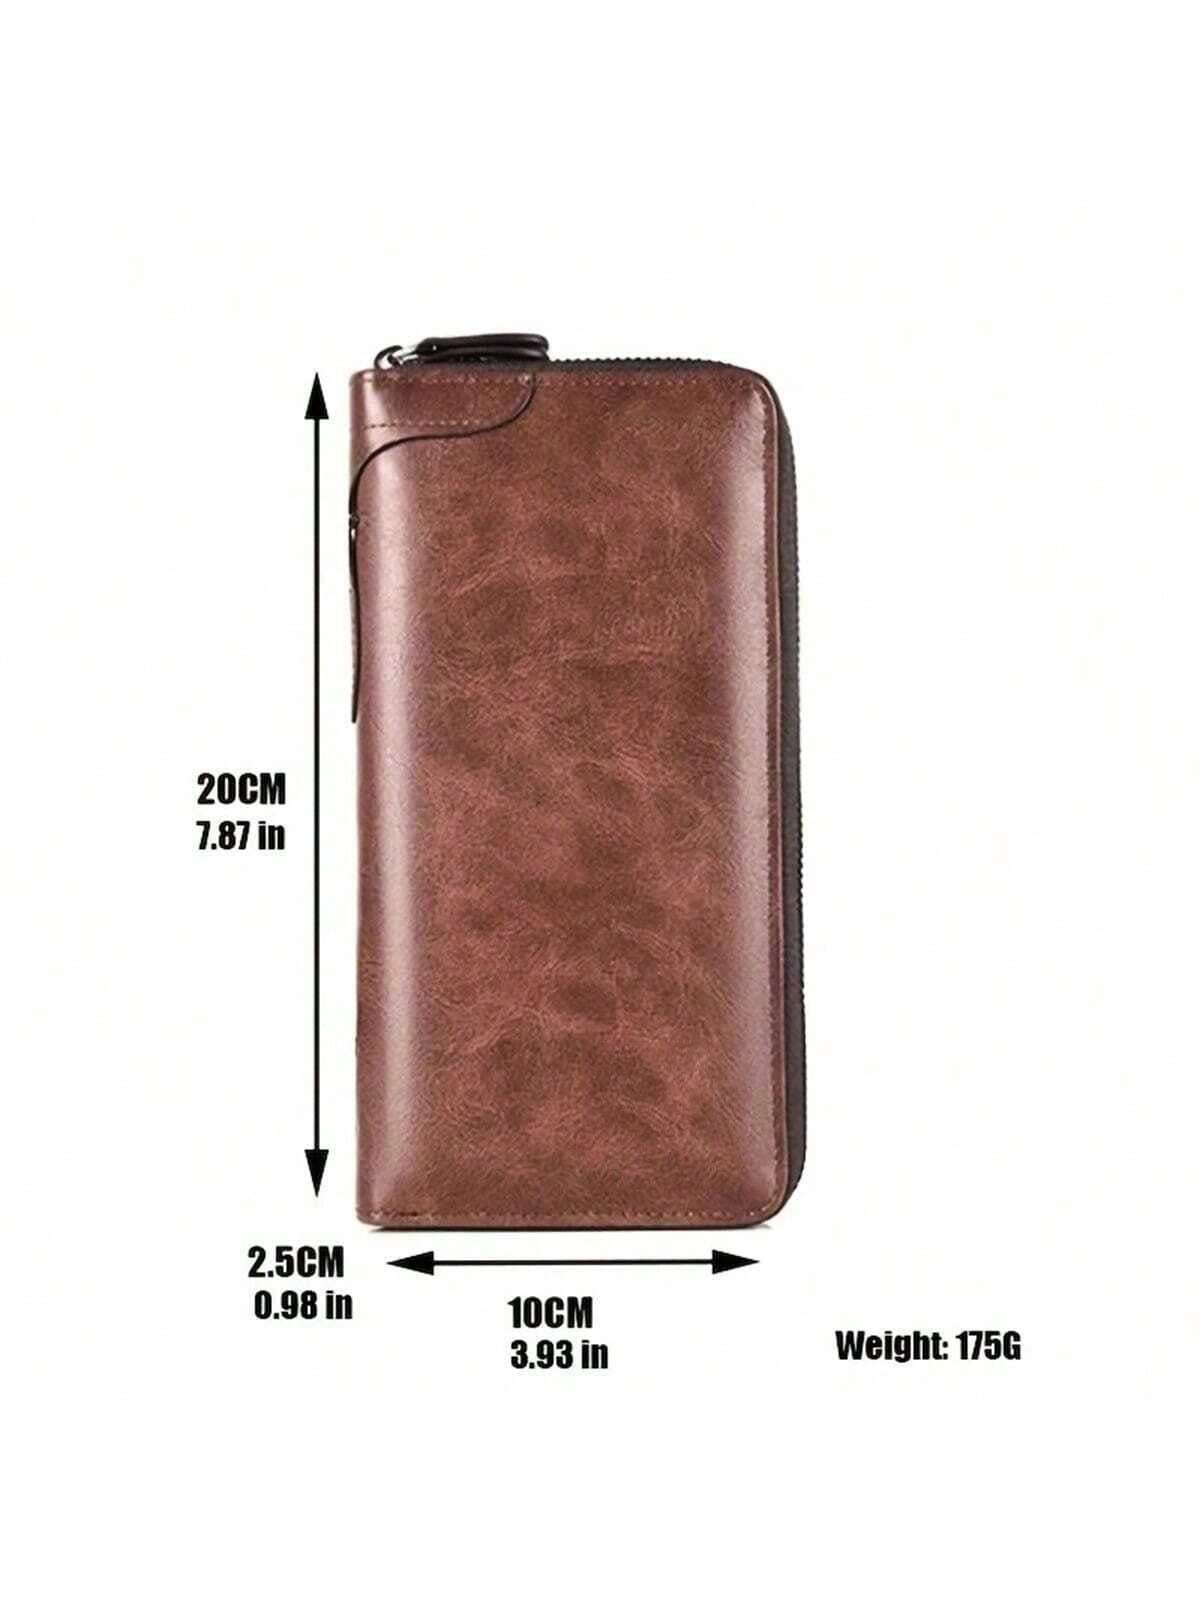 Men's Long Zipper Wallet Pu Leather Wallet for Men RFID Blocking Business Clutch Bag Credit Card Holder Purse Man